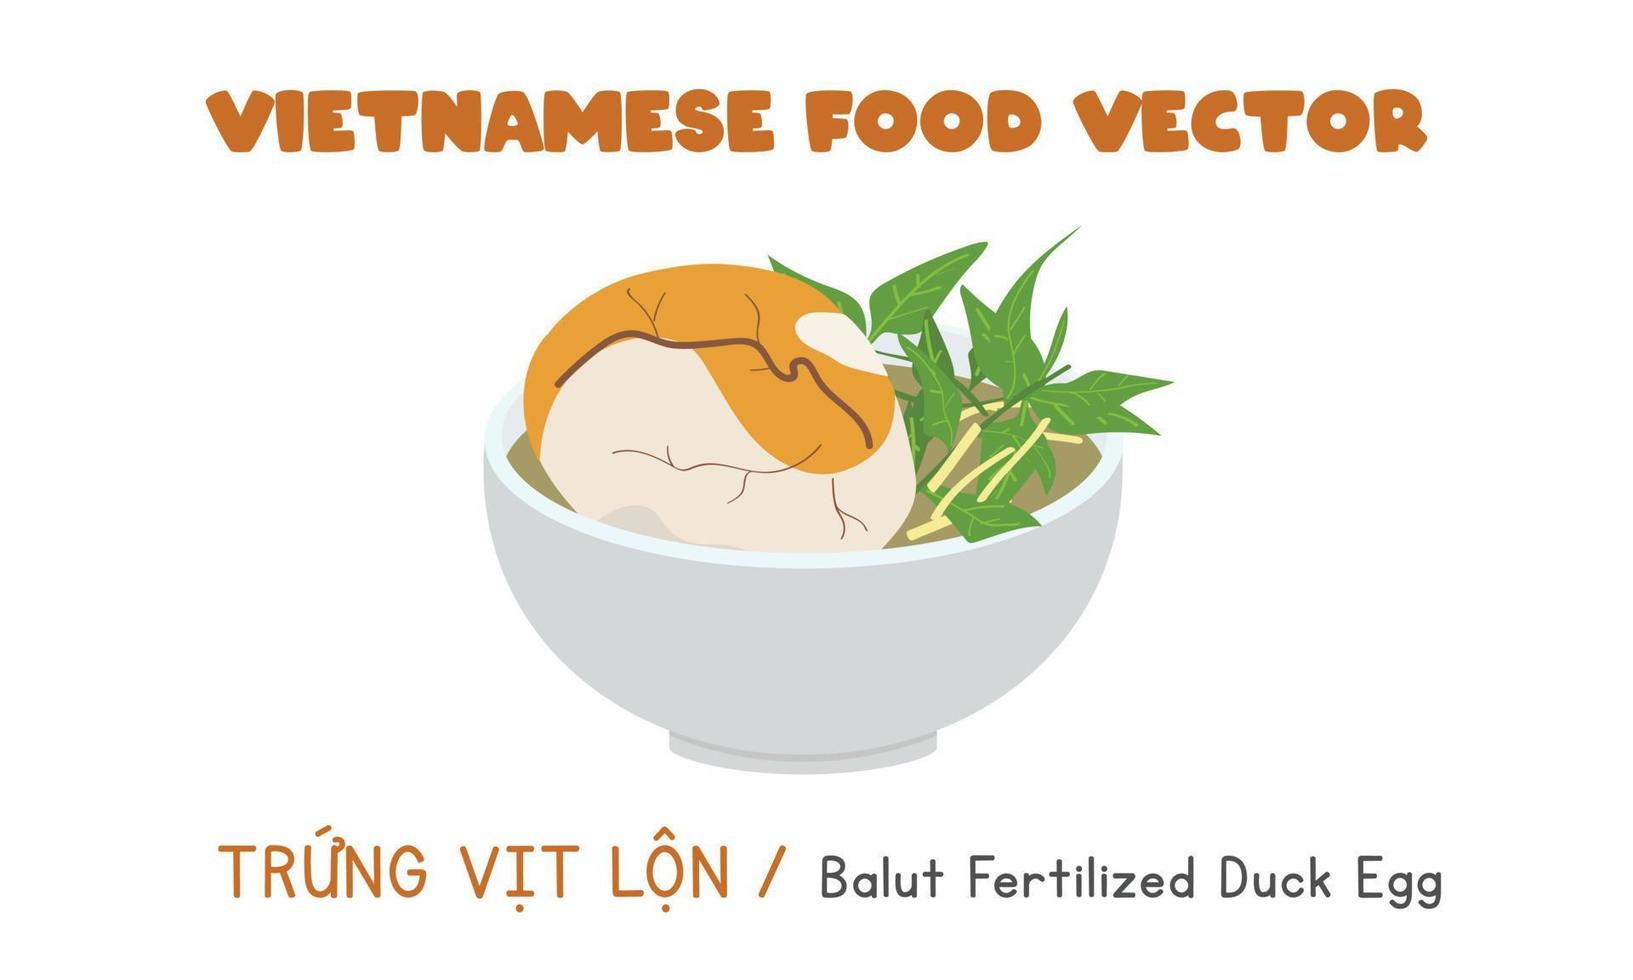 vector plano de huevo de pato fertilizado balut vietnamita. dibujos animados de imágenes prediseñadas trung vit lon. comida asiática. cocina vietnamita. diseño de vector de comida exótica vietnamita